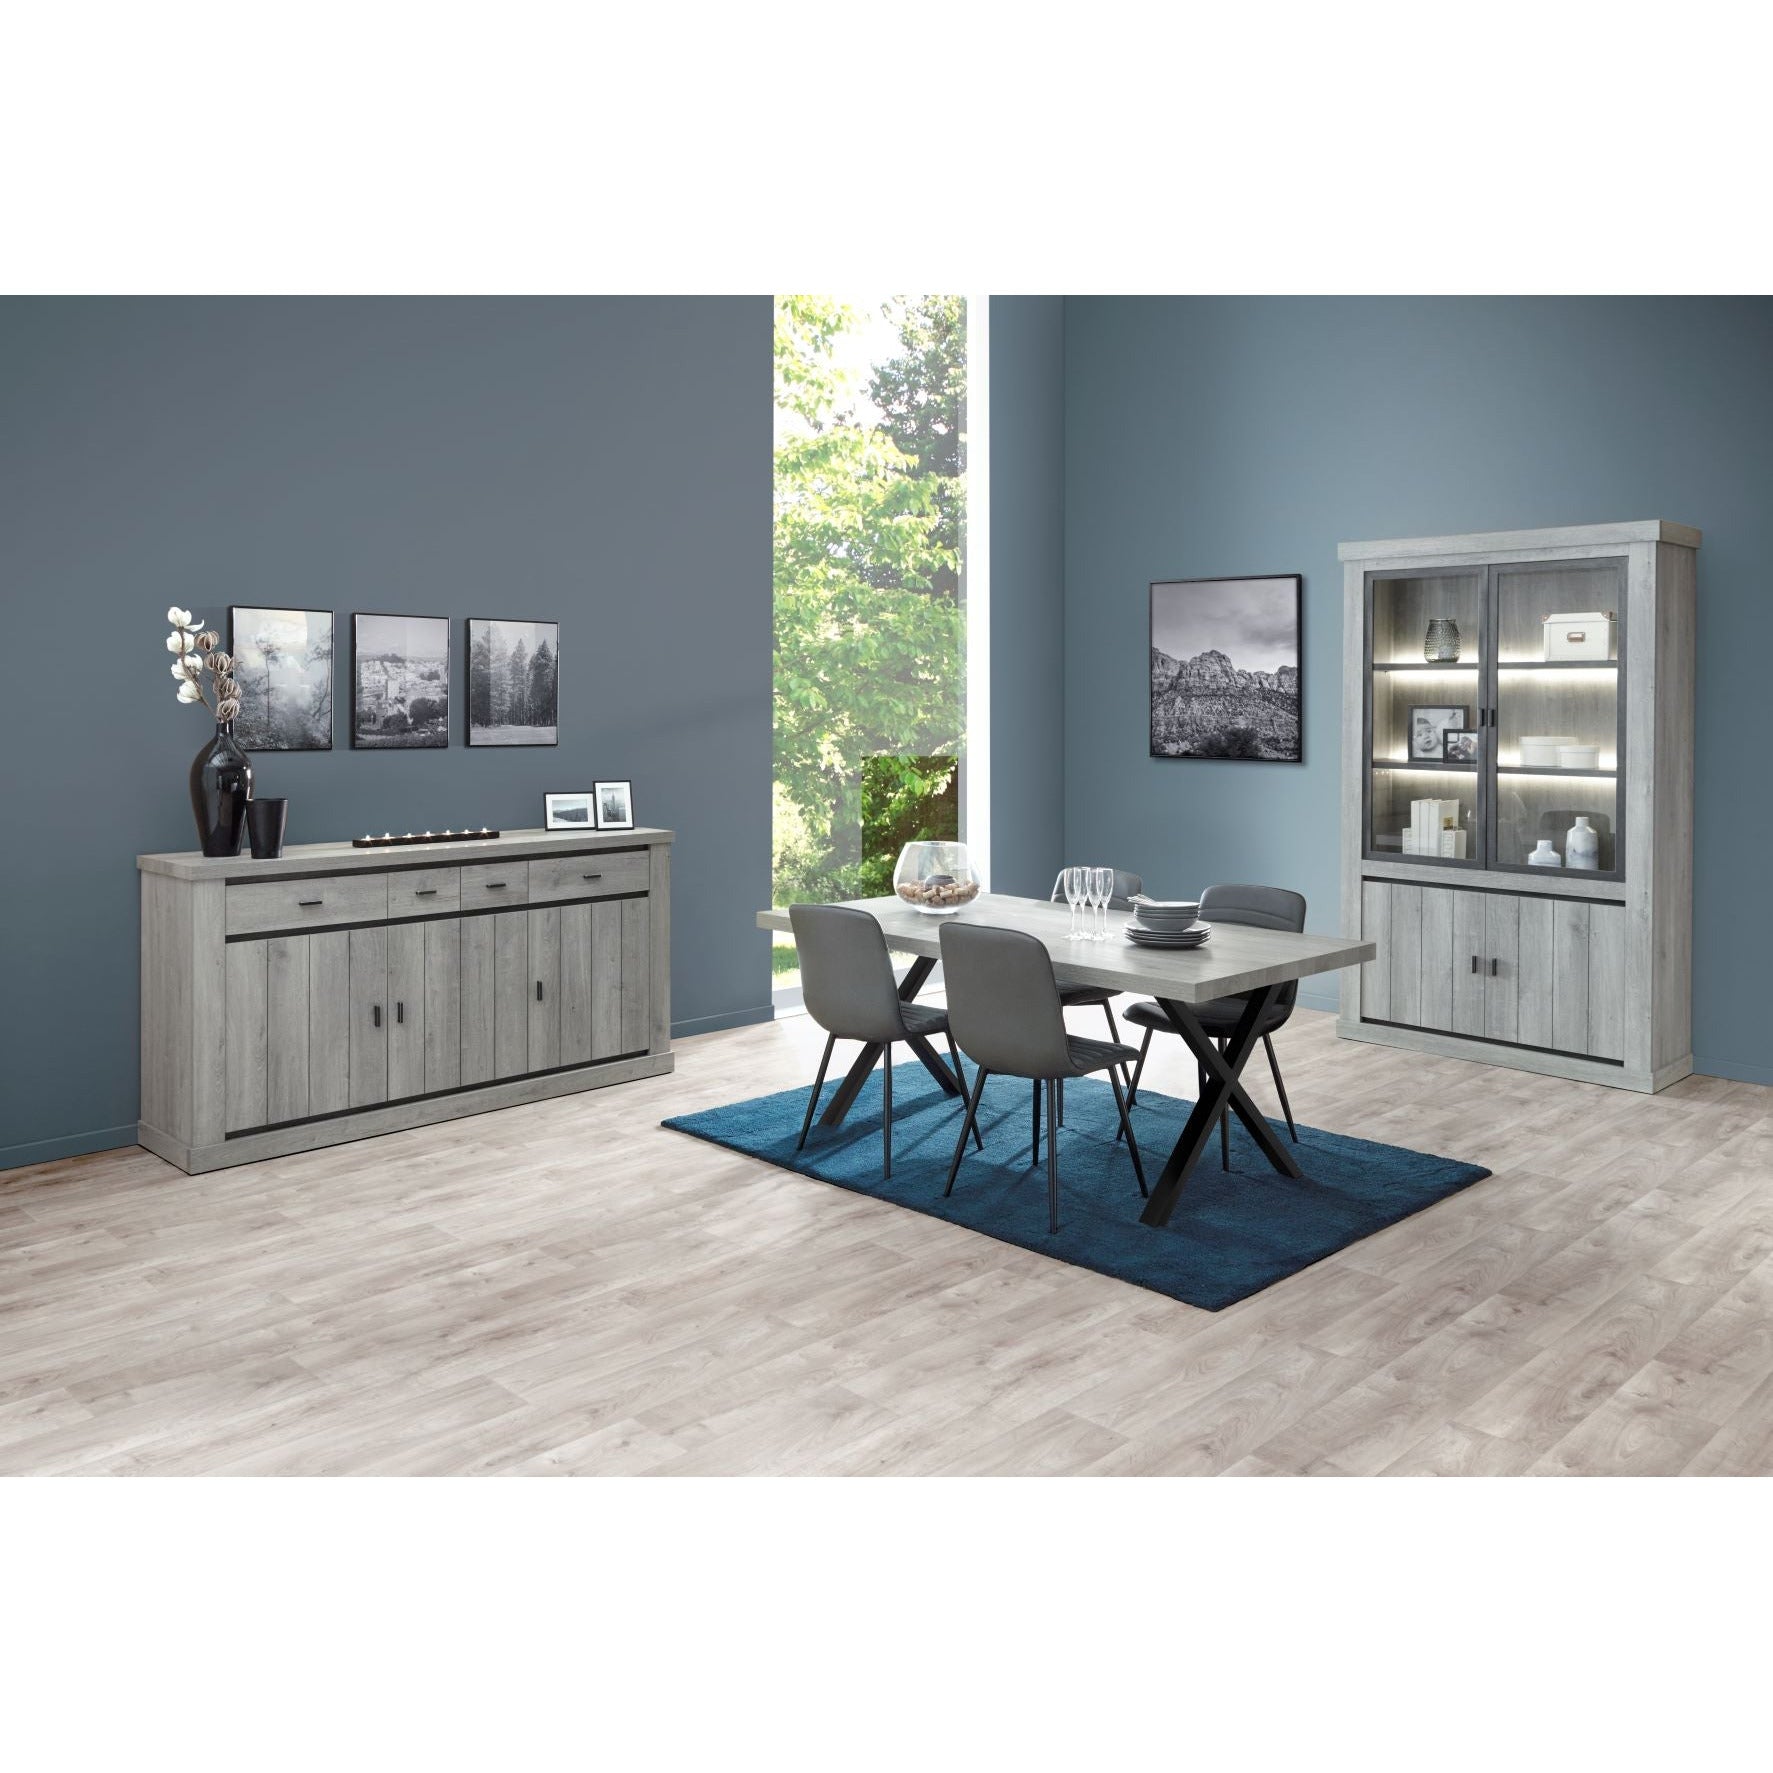 Display cabinet | Furniture series Coupé | natural, gray, black